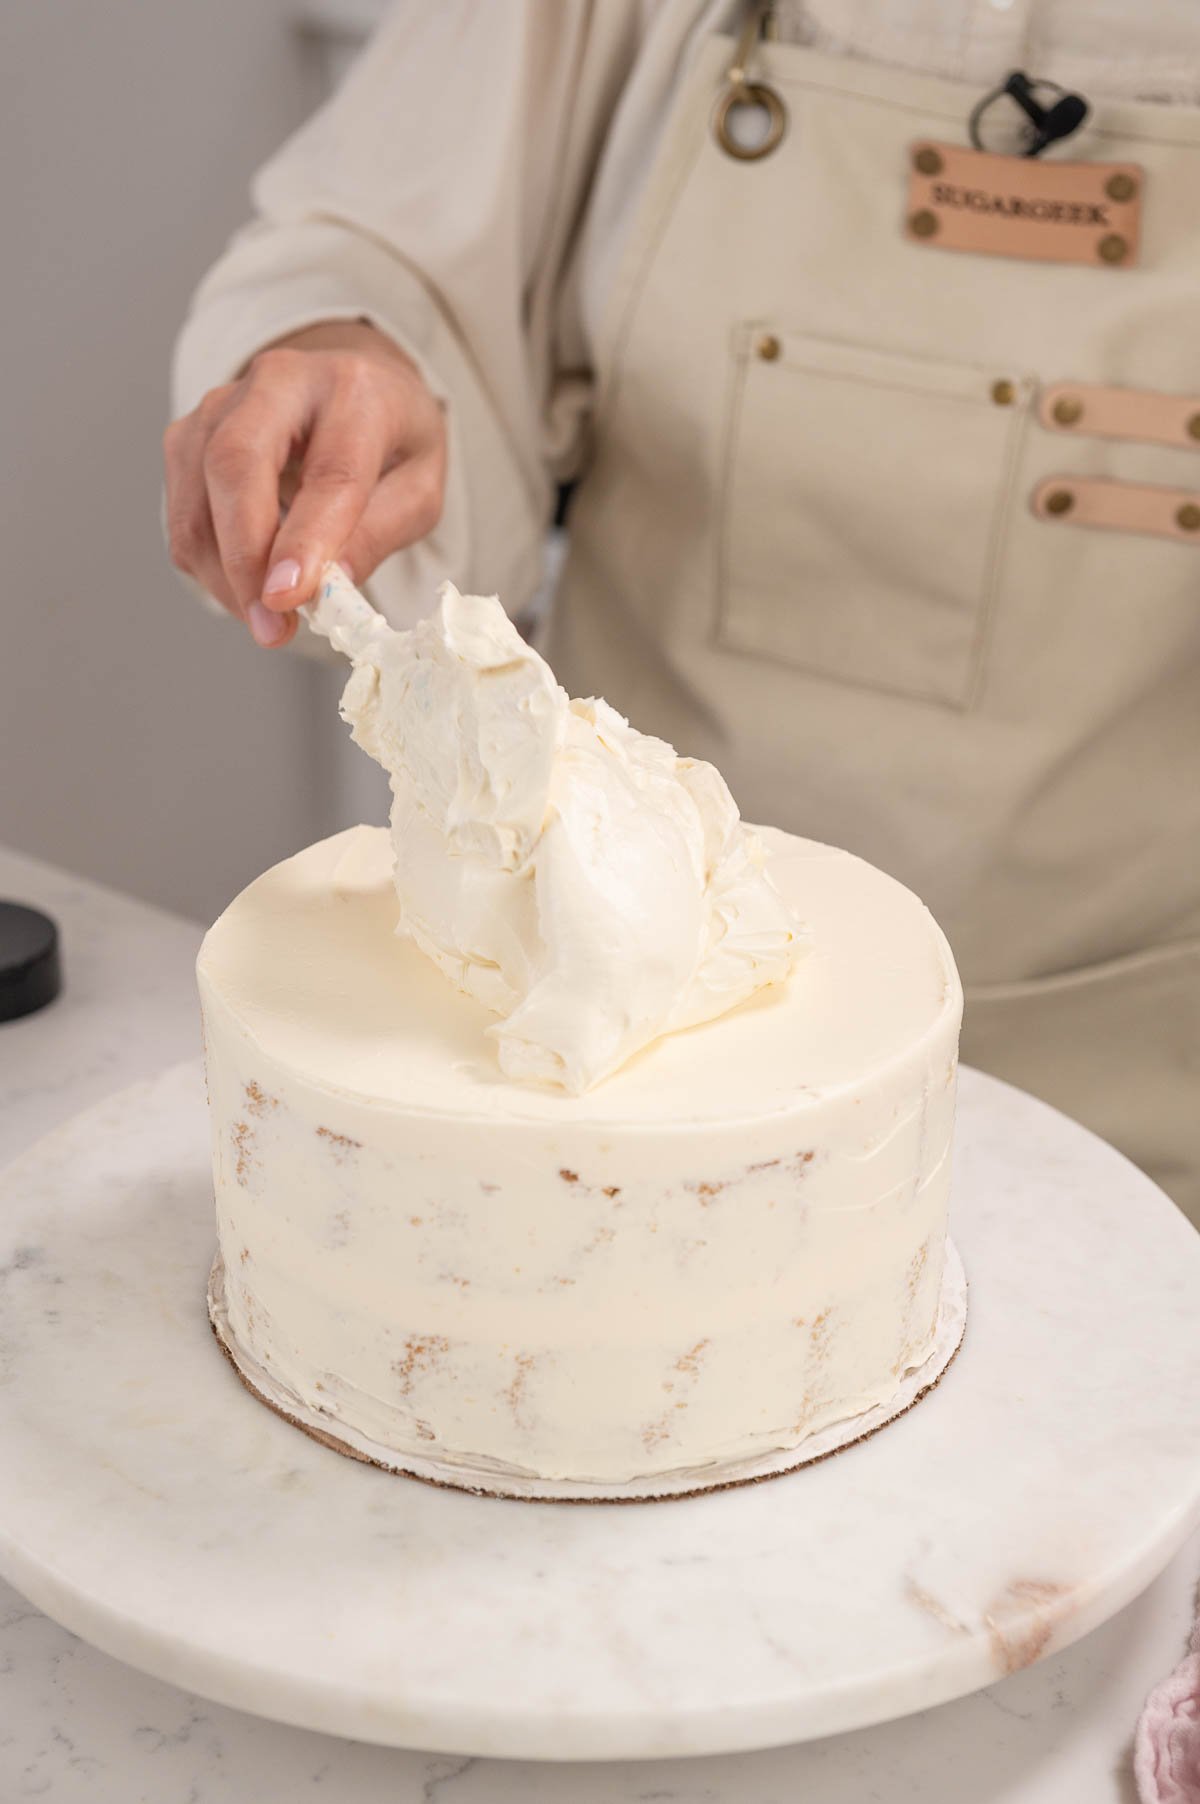 crumbcoat on a vanilla cake